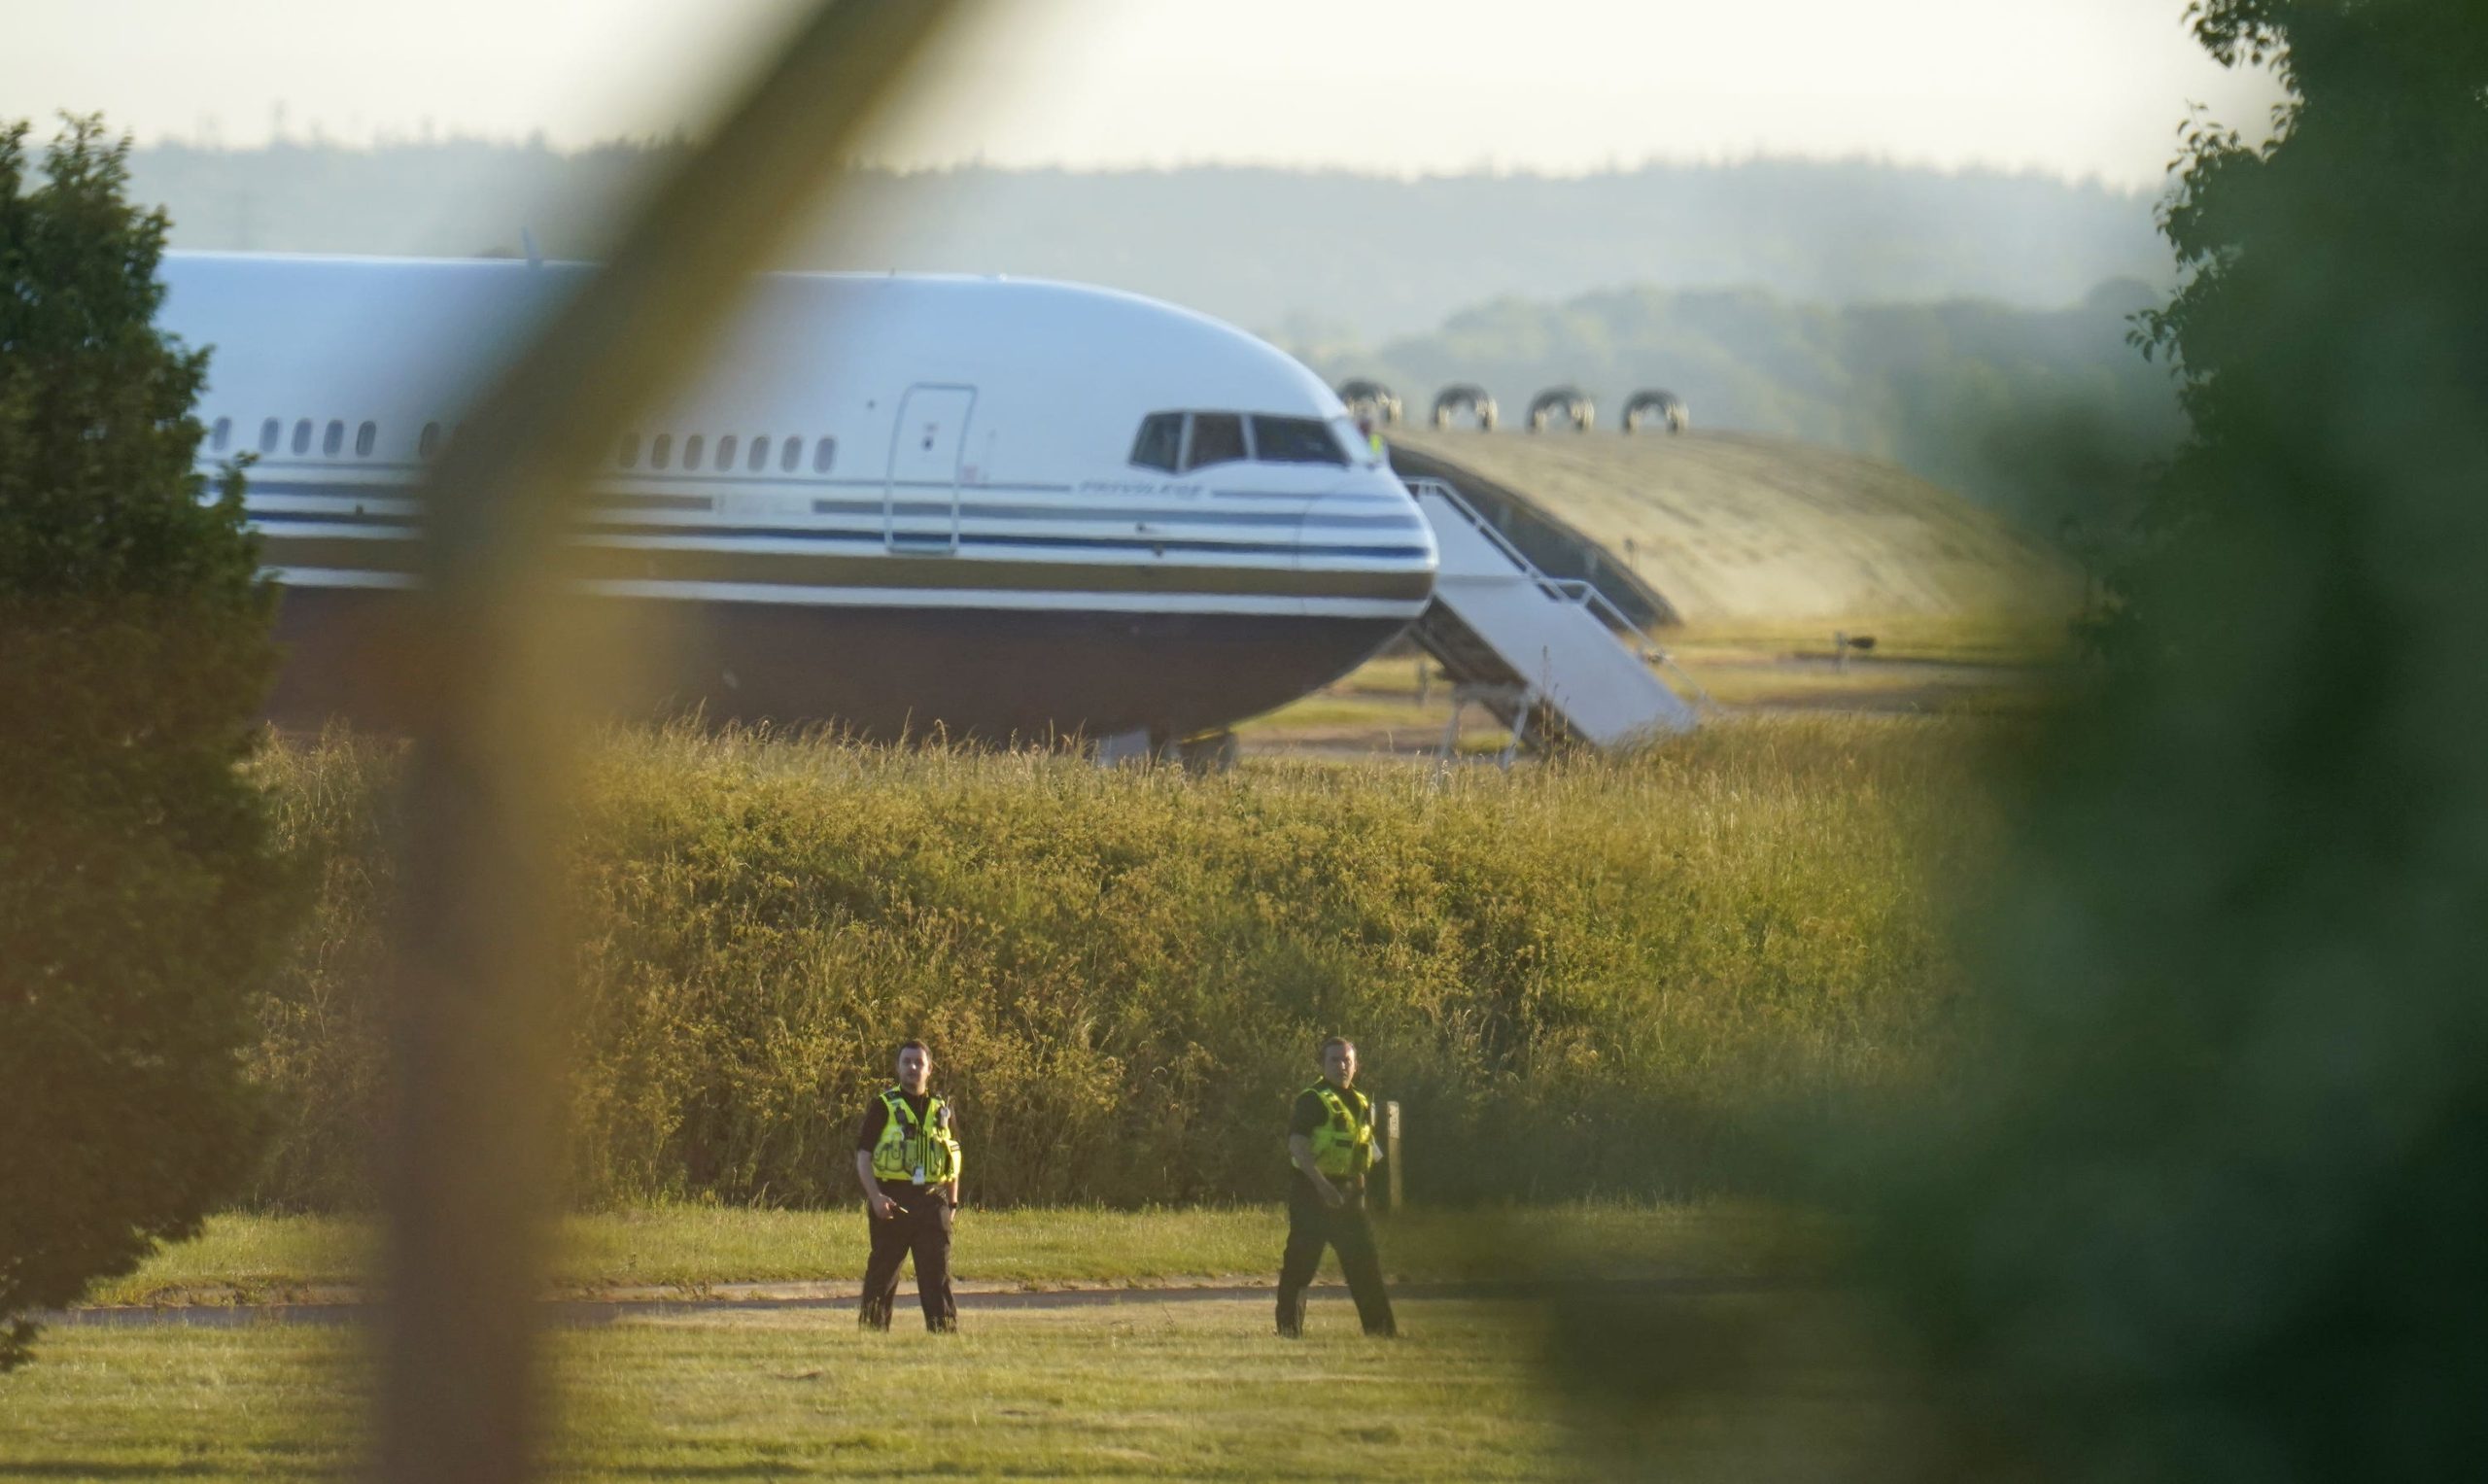 Date set for first Rwanda removal flight